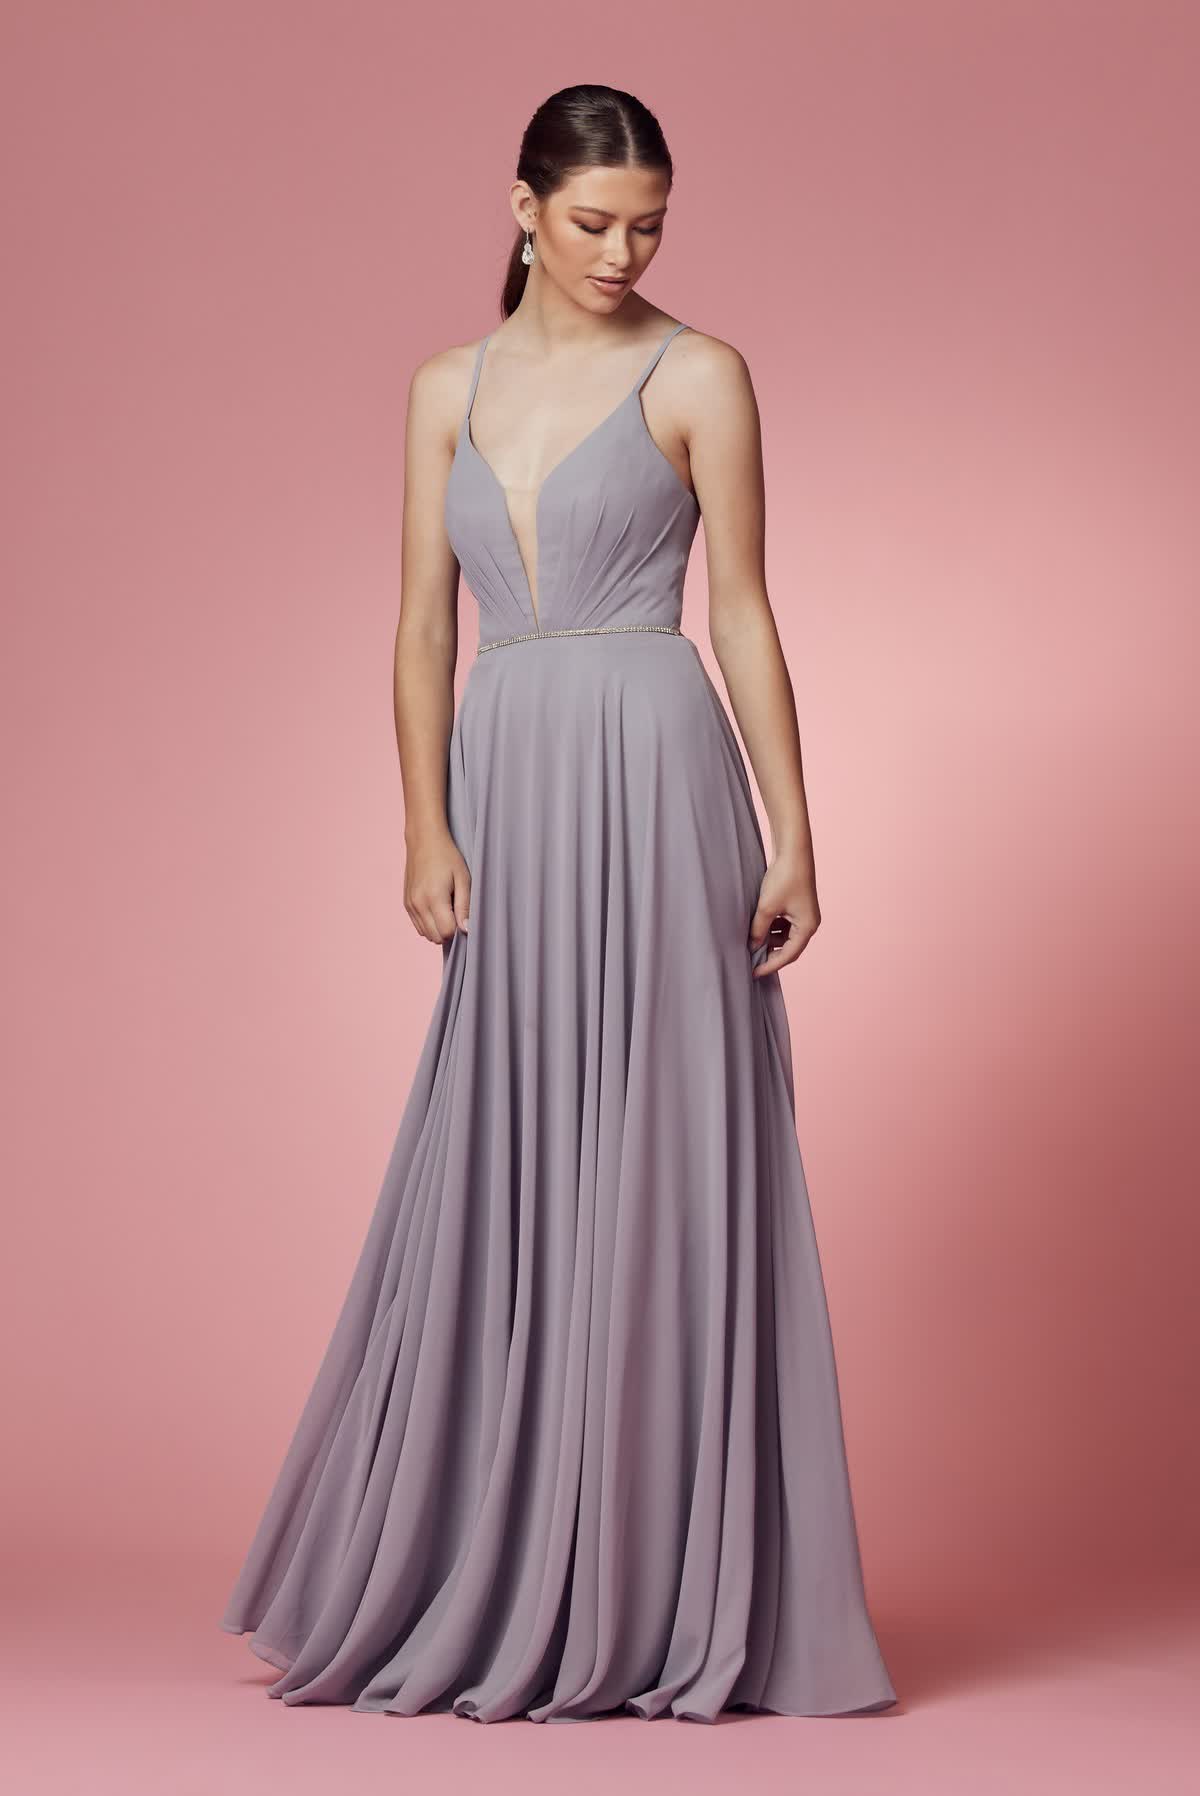 Sleeveless Tulle Simple V-Neck Chiffon Long Bridesmaid Dress NXR416-Bridesmaid Dress-smcfashion.com